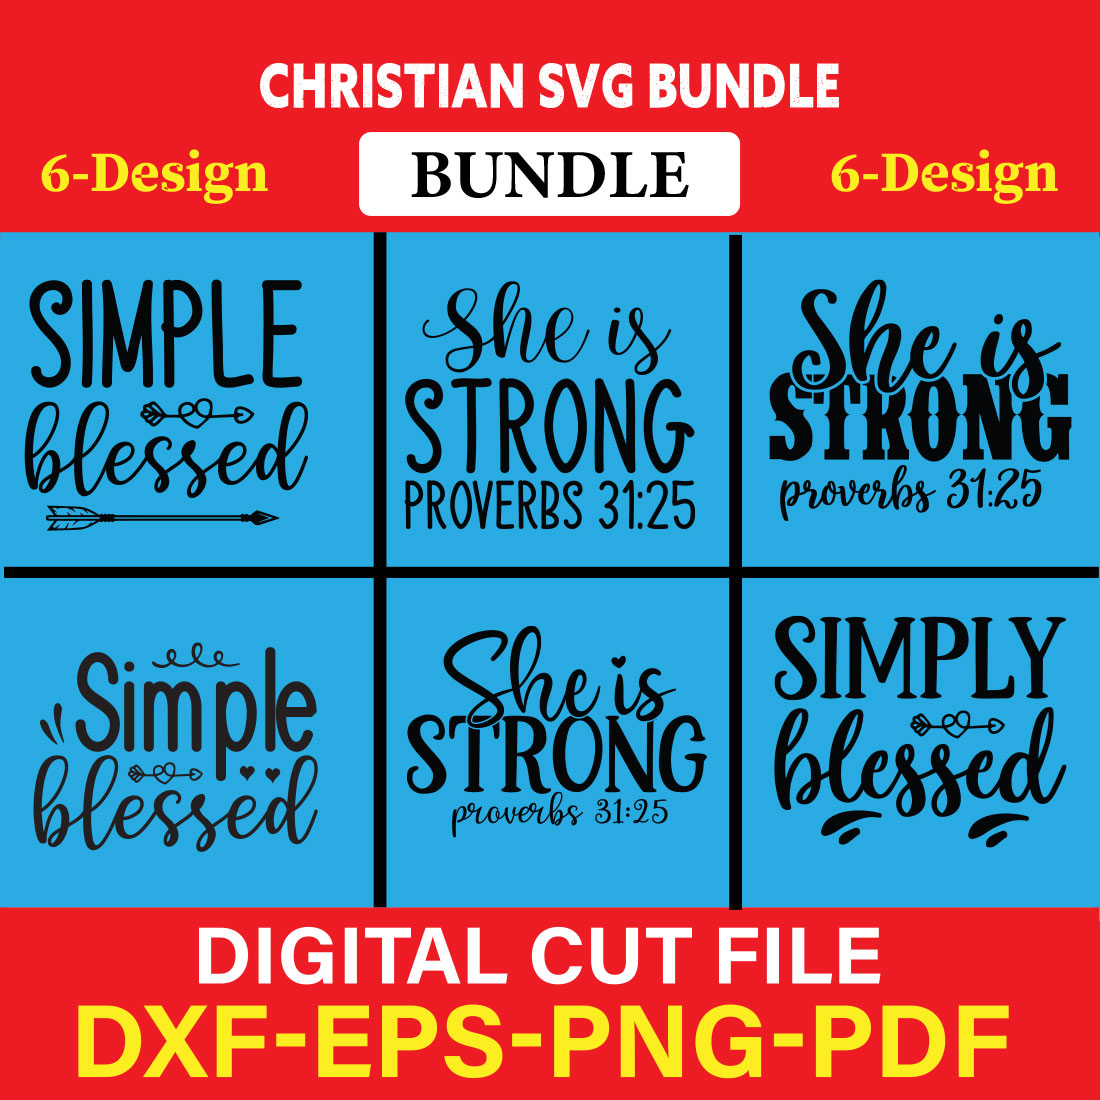 Christian T-shirt Design Bundle Vol-23 cover image.